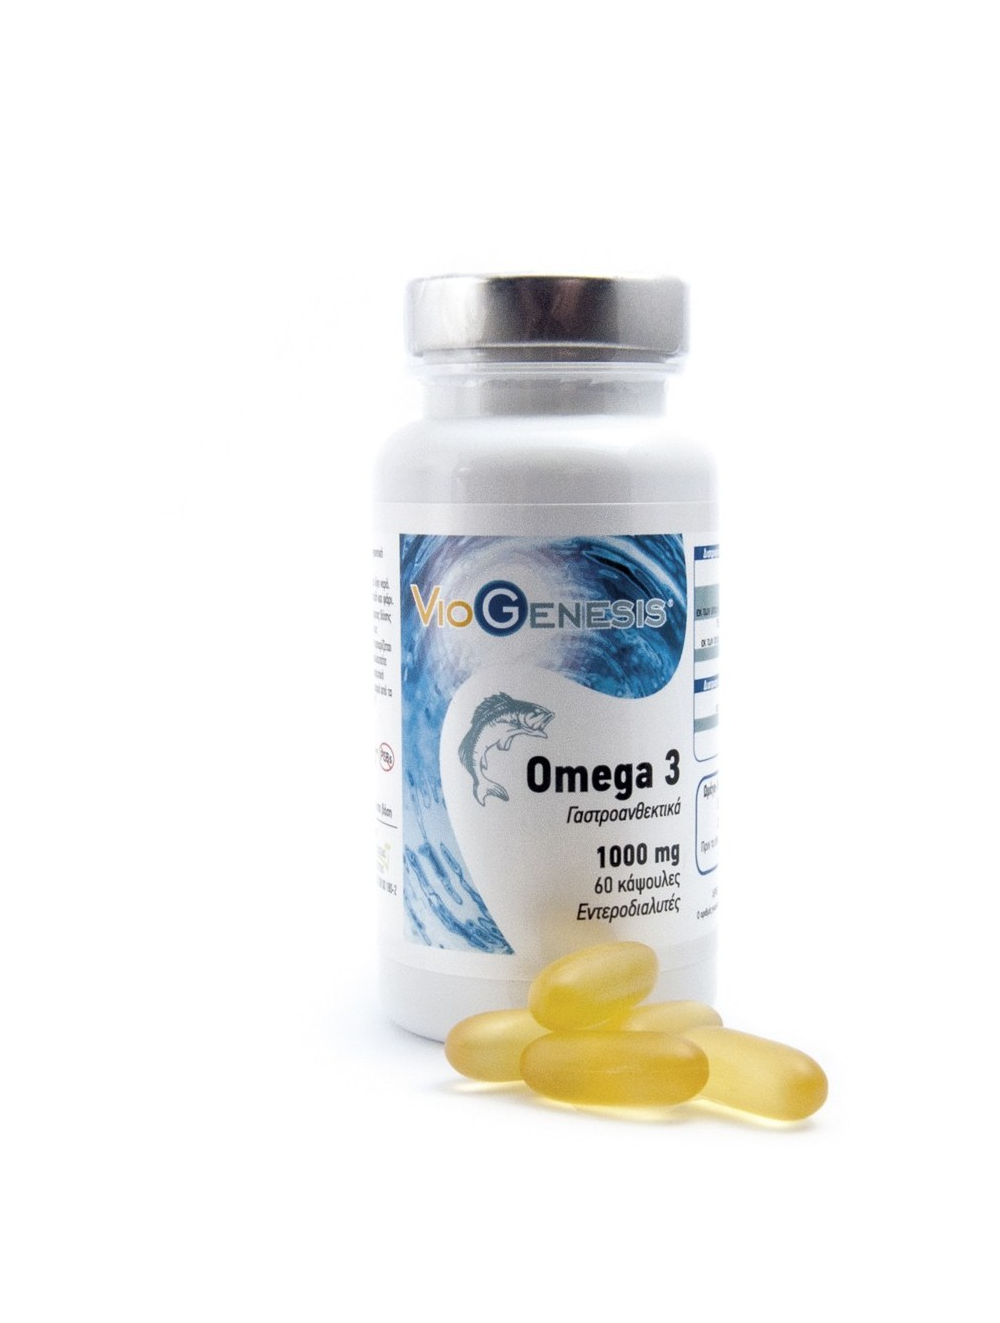 Viogenesis Omega-3 Fish Oil 1000mg - 60 Κάψουλες